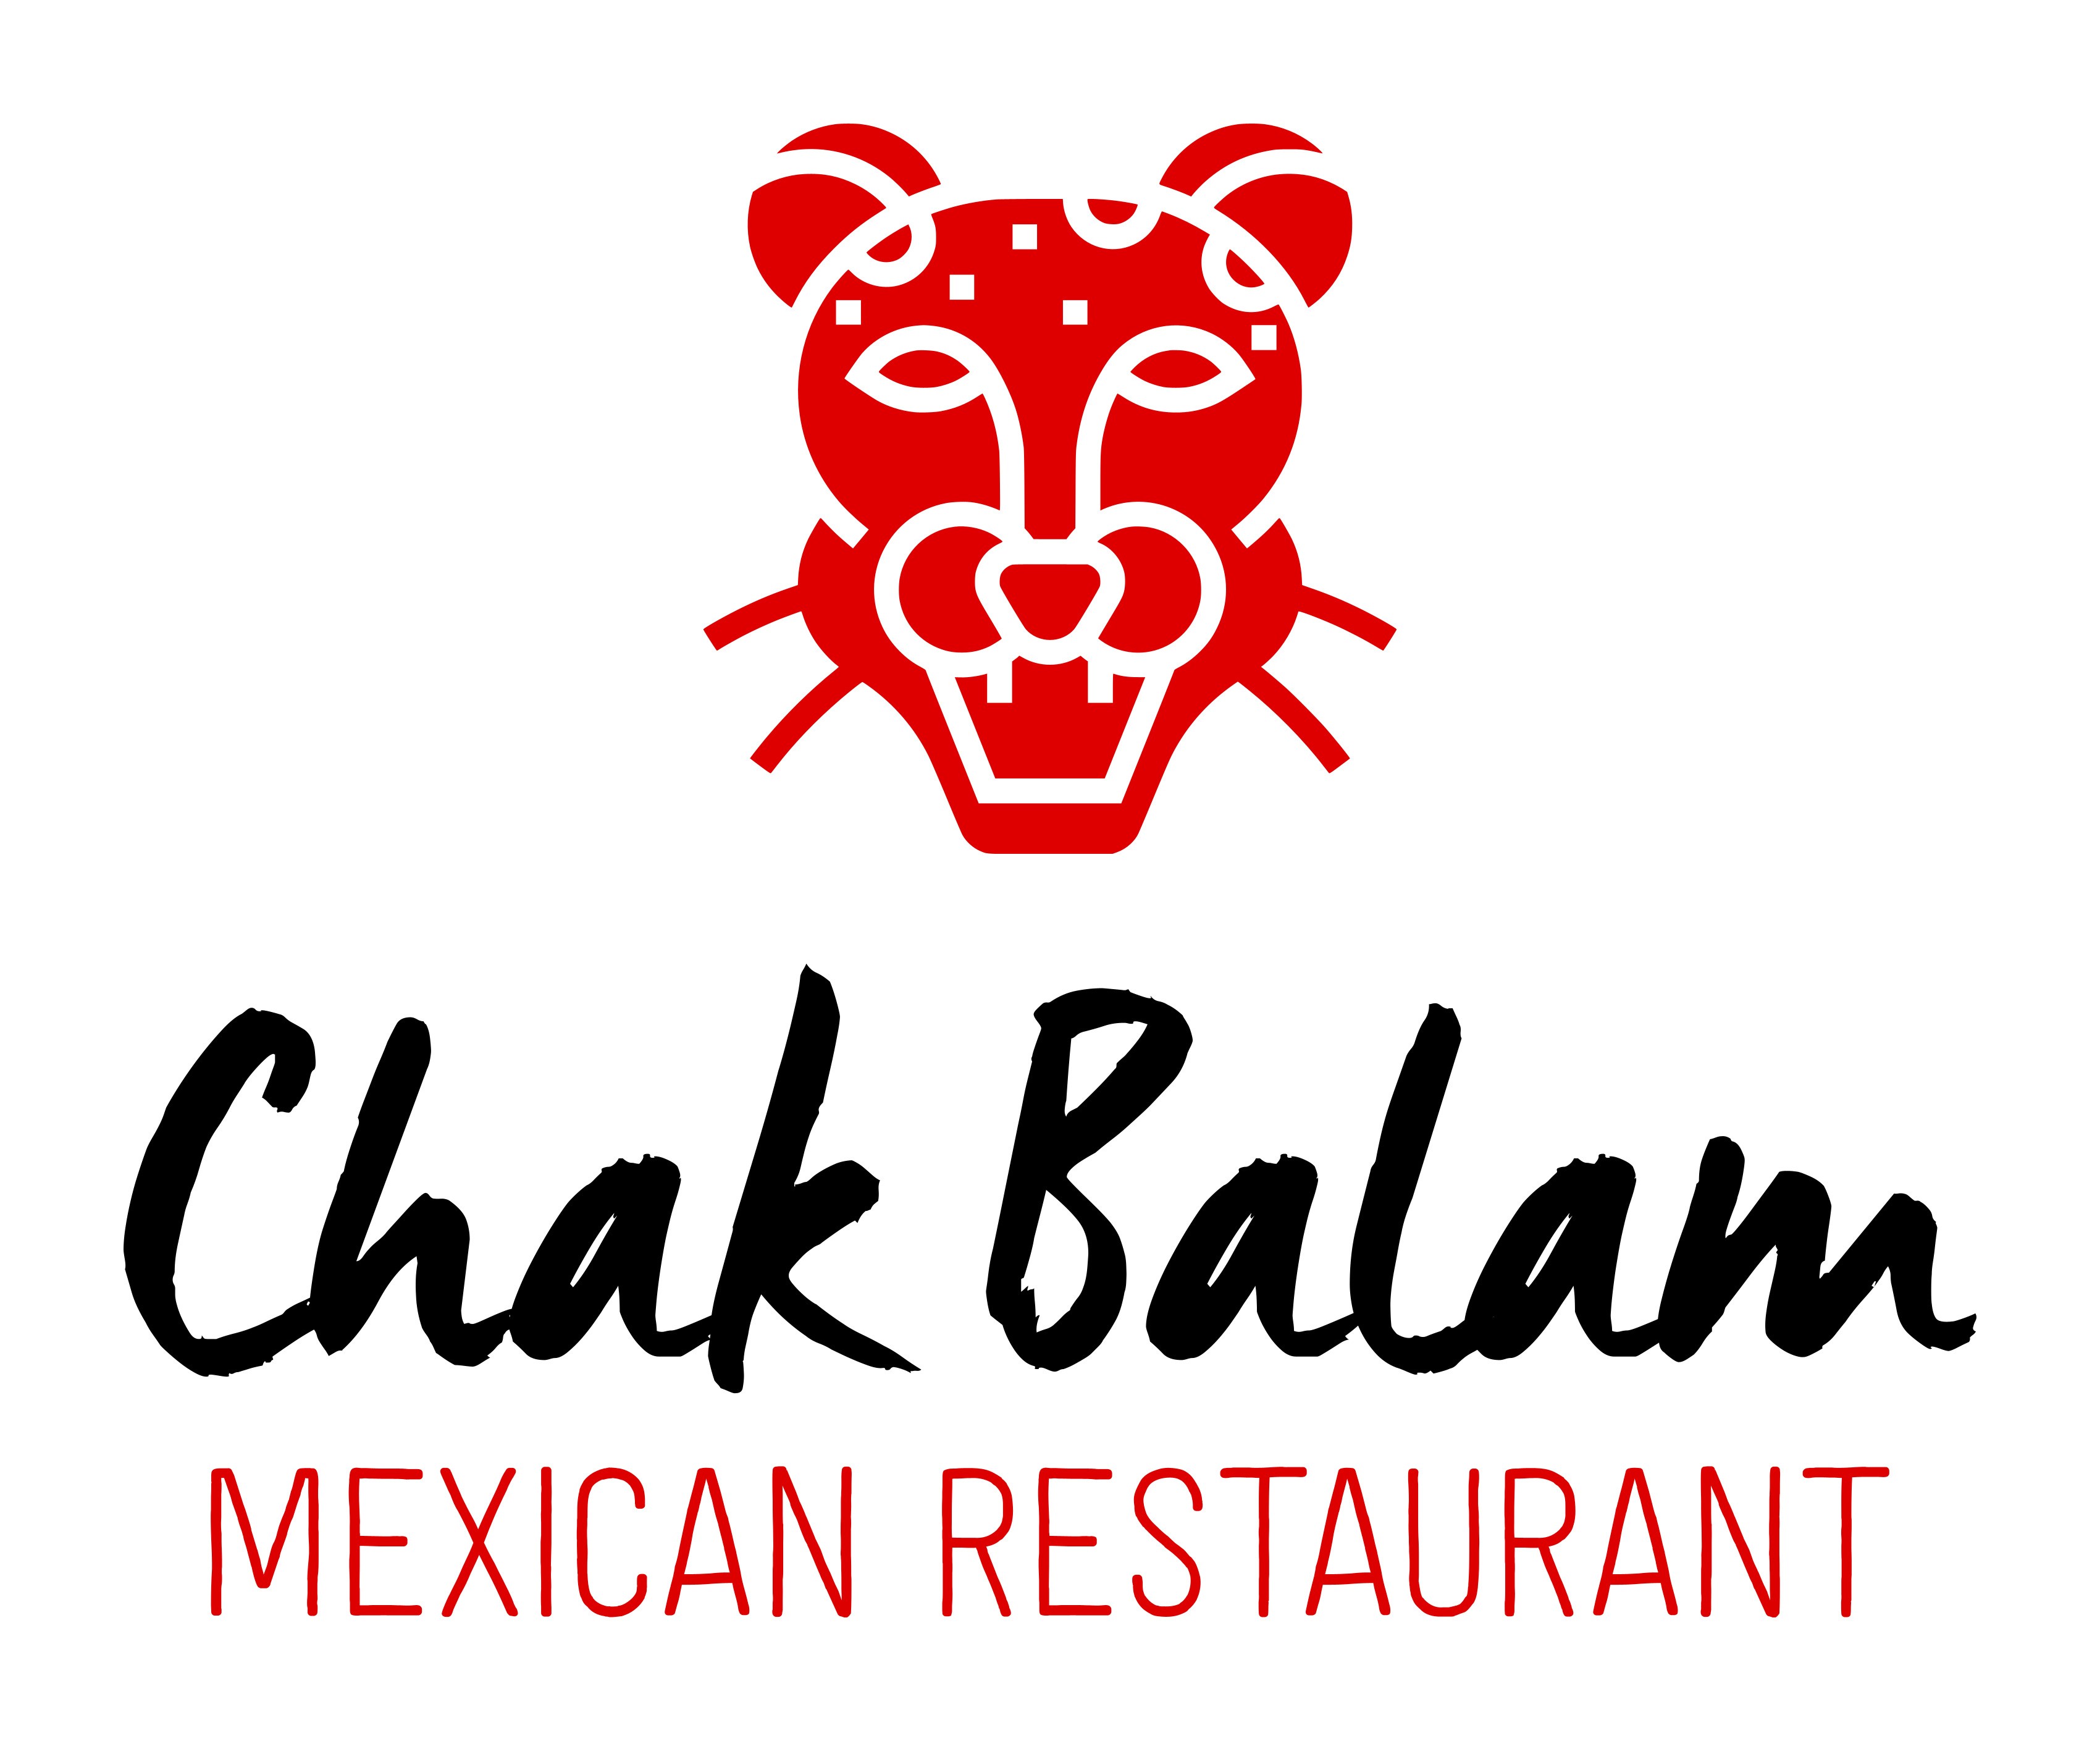 Chak Balam Mex Restaurant